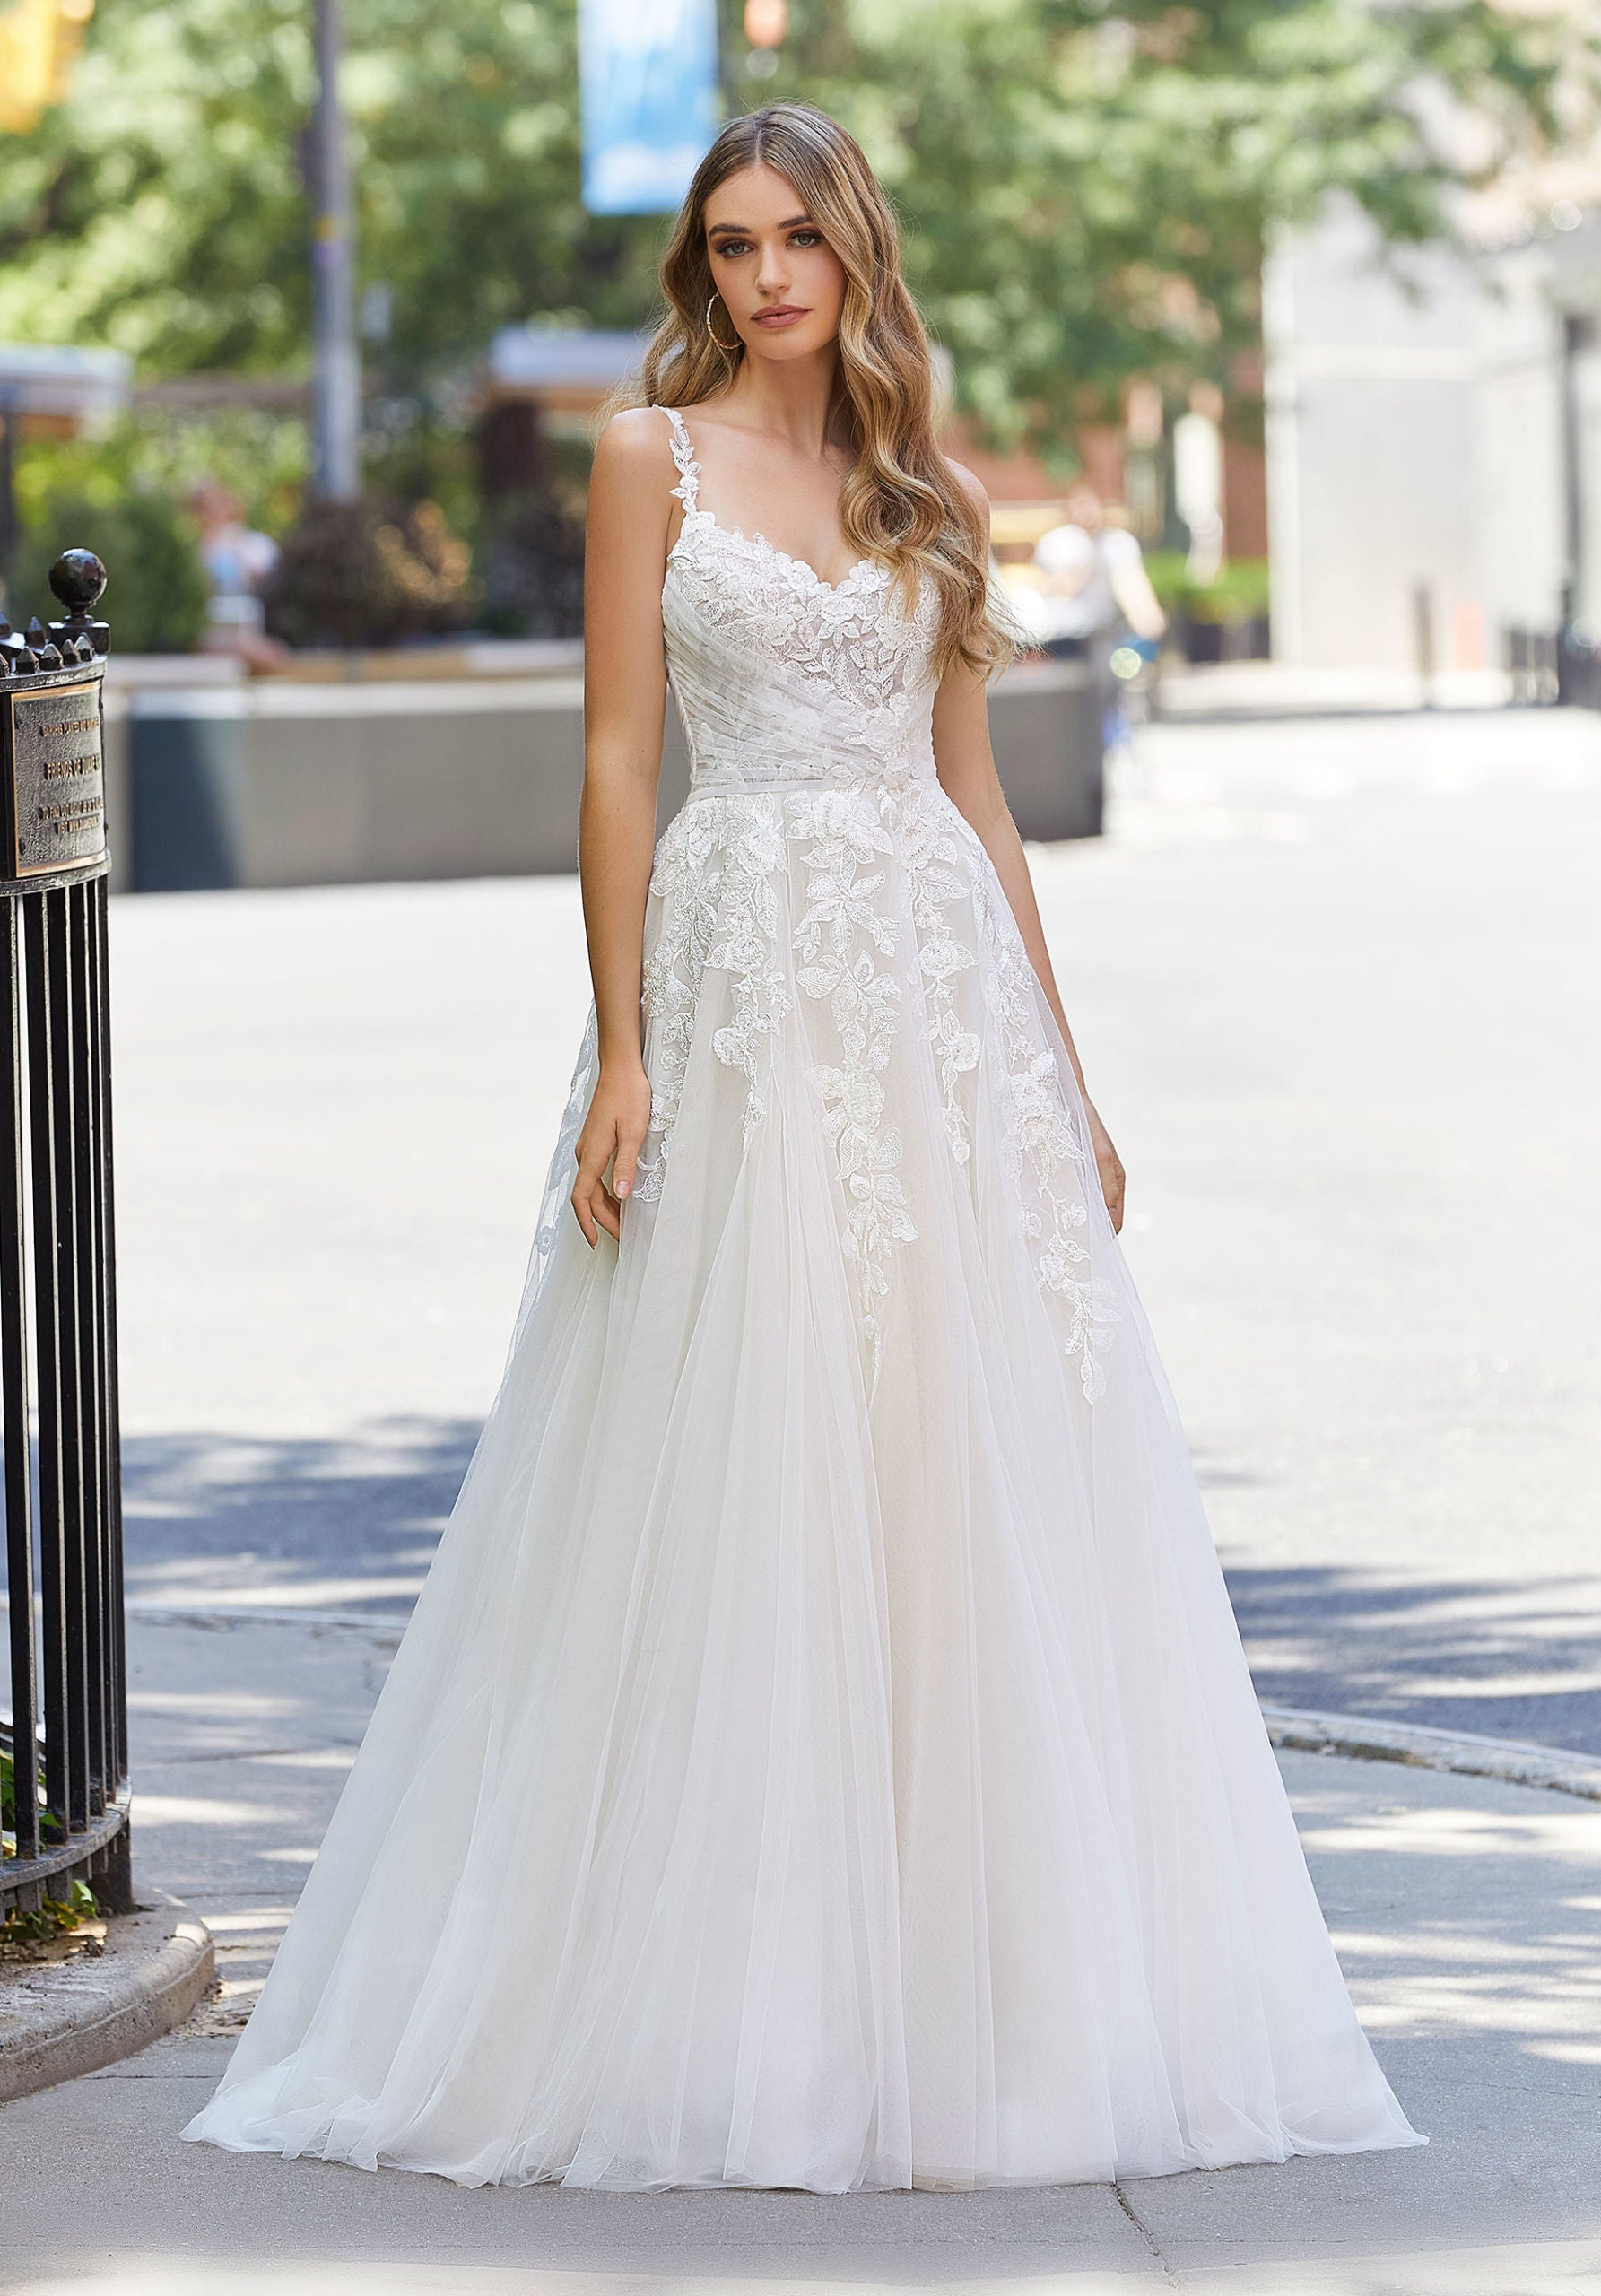 Magnolia *plus size* - A line wedding dress with lace straps